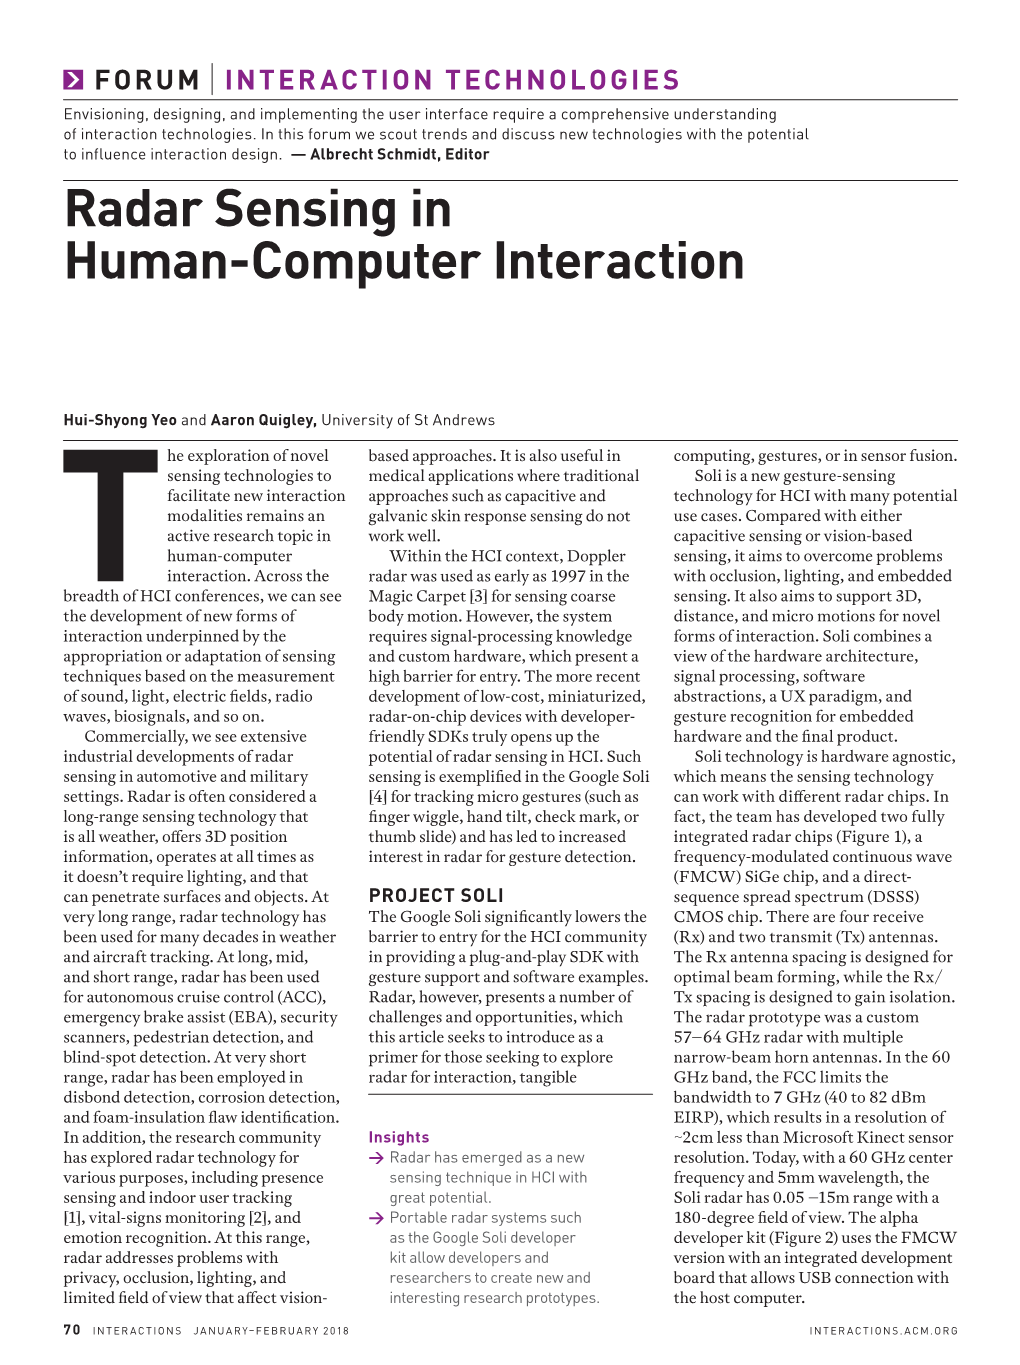 Radar Sensing in Human-Computer Interaction